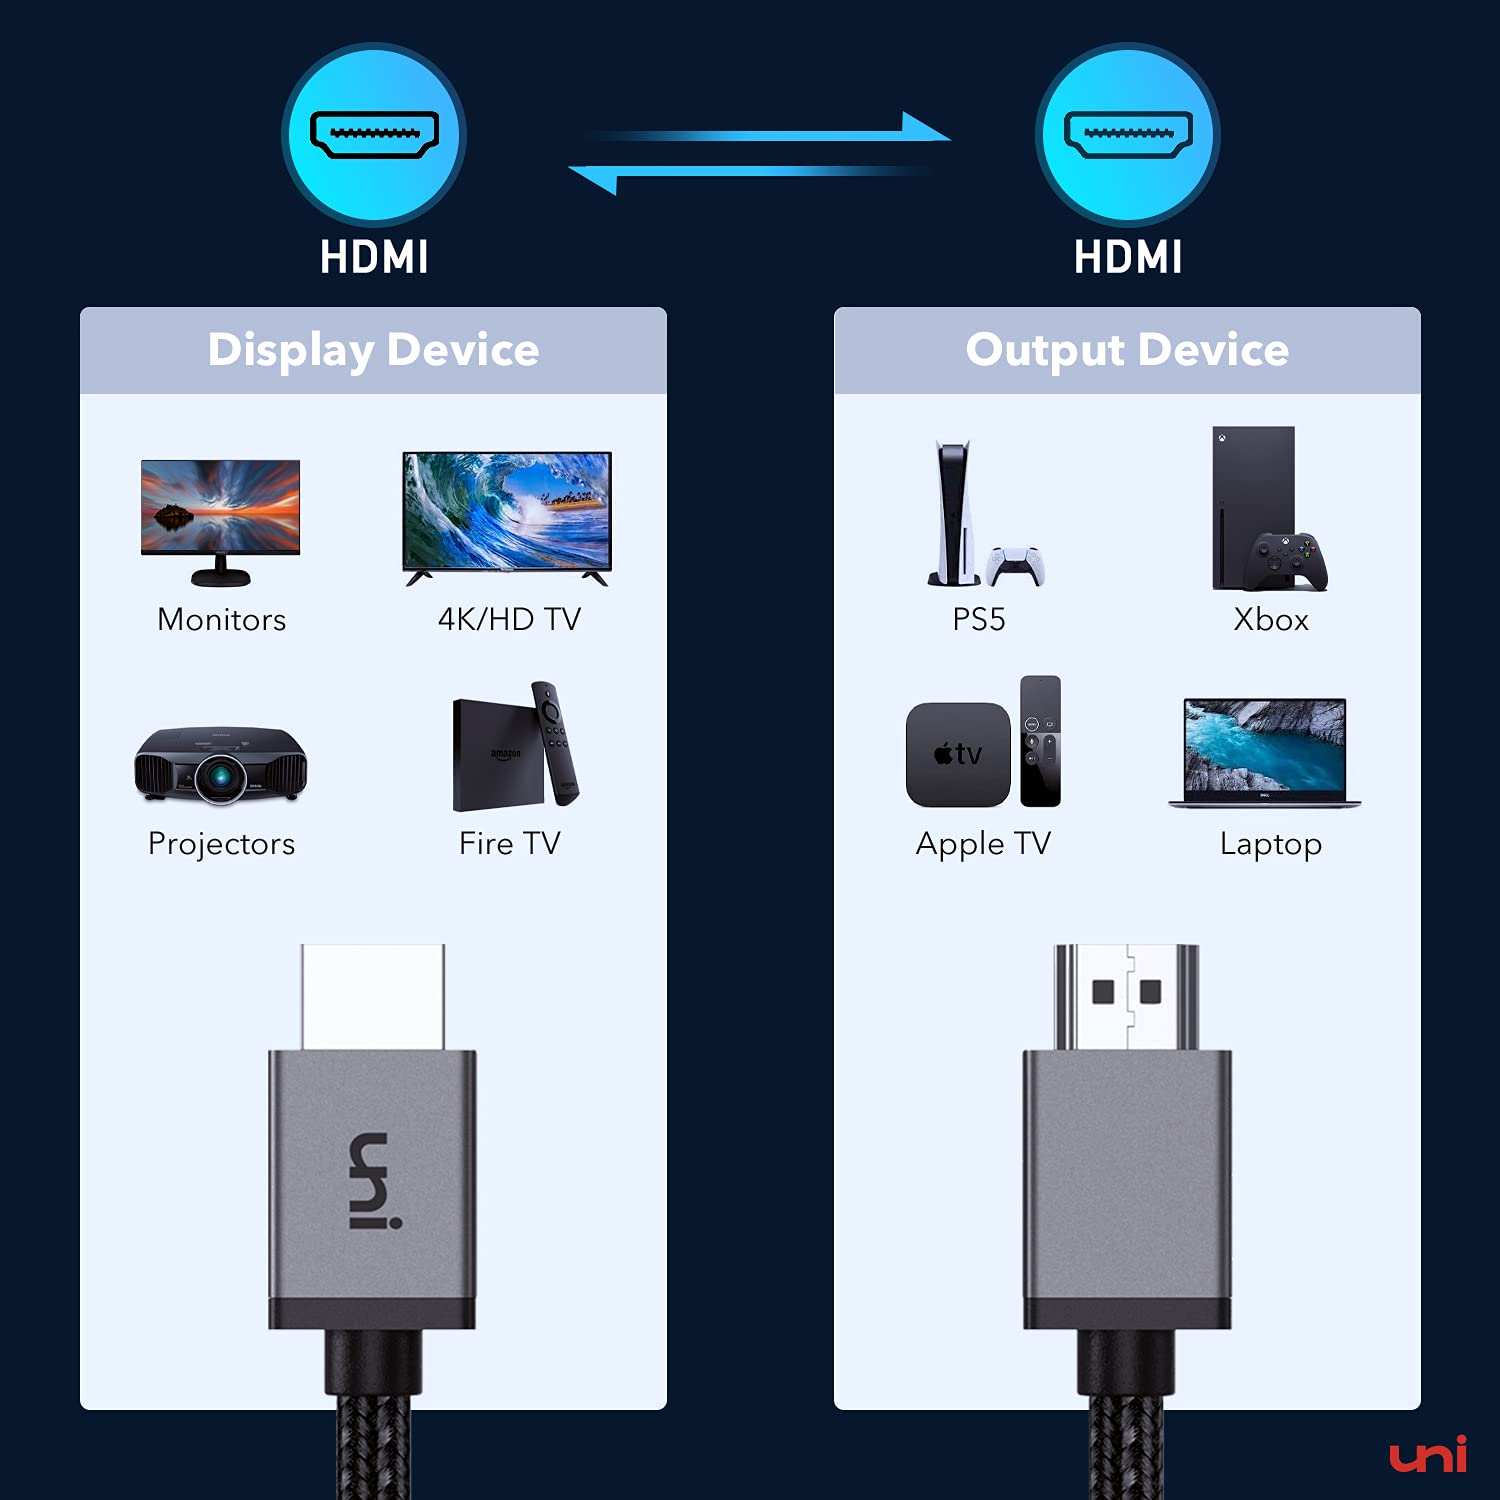 Cable HDMI M-M 3m v 1.4